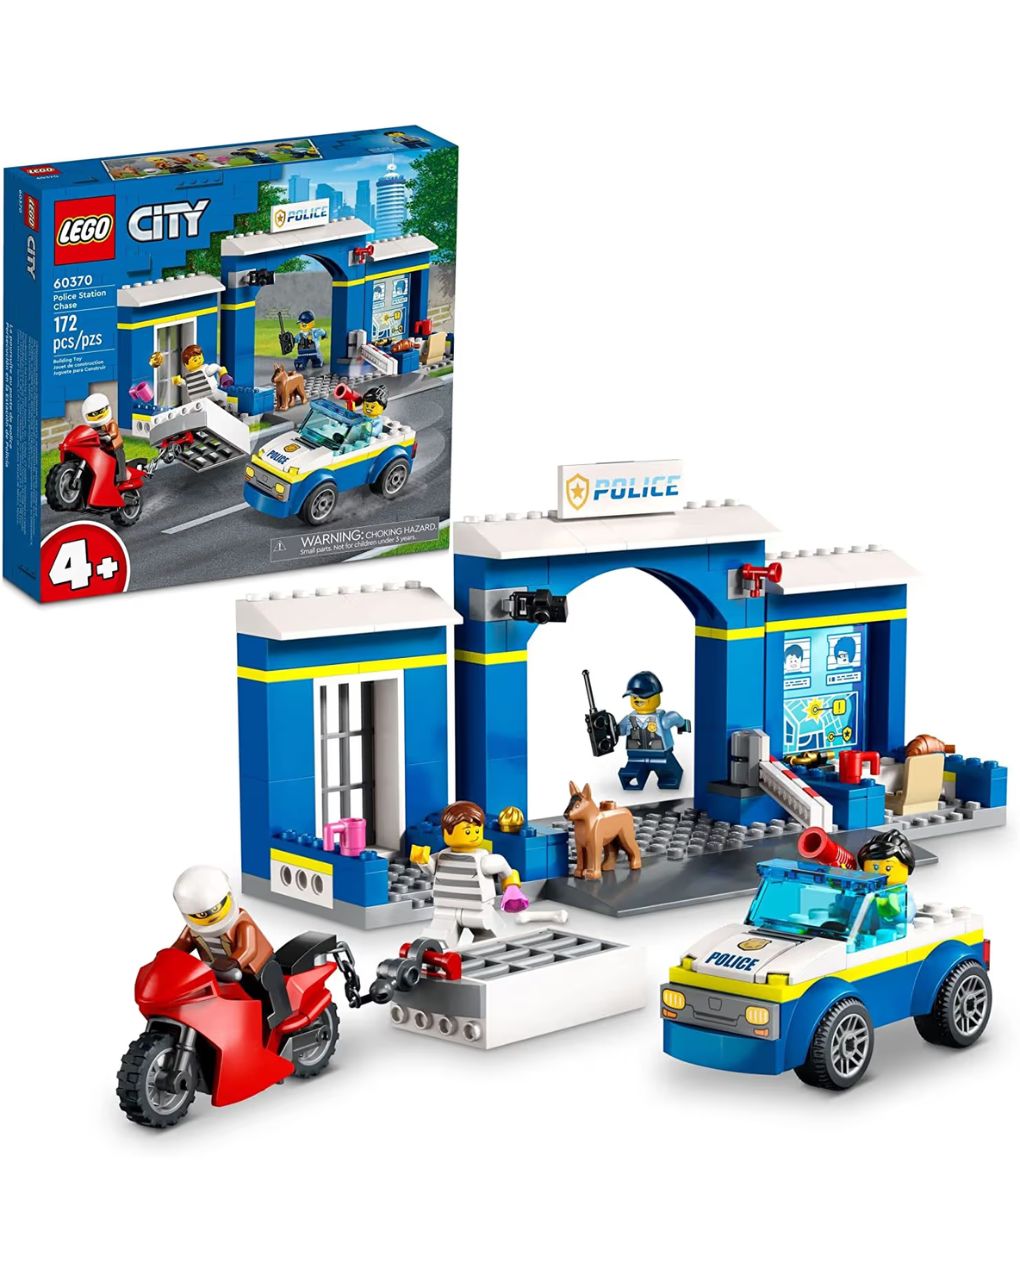 Lego city police station chase 60370